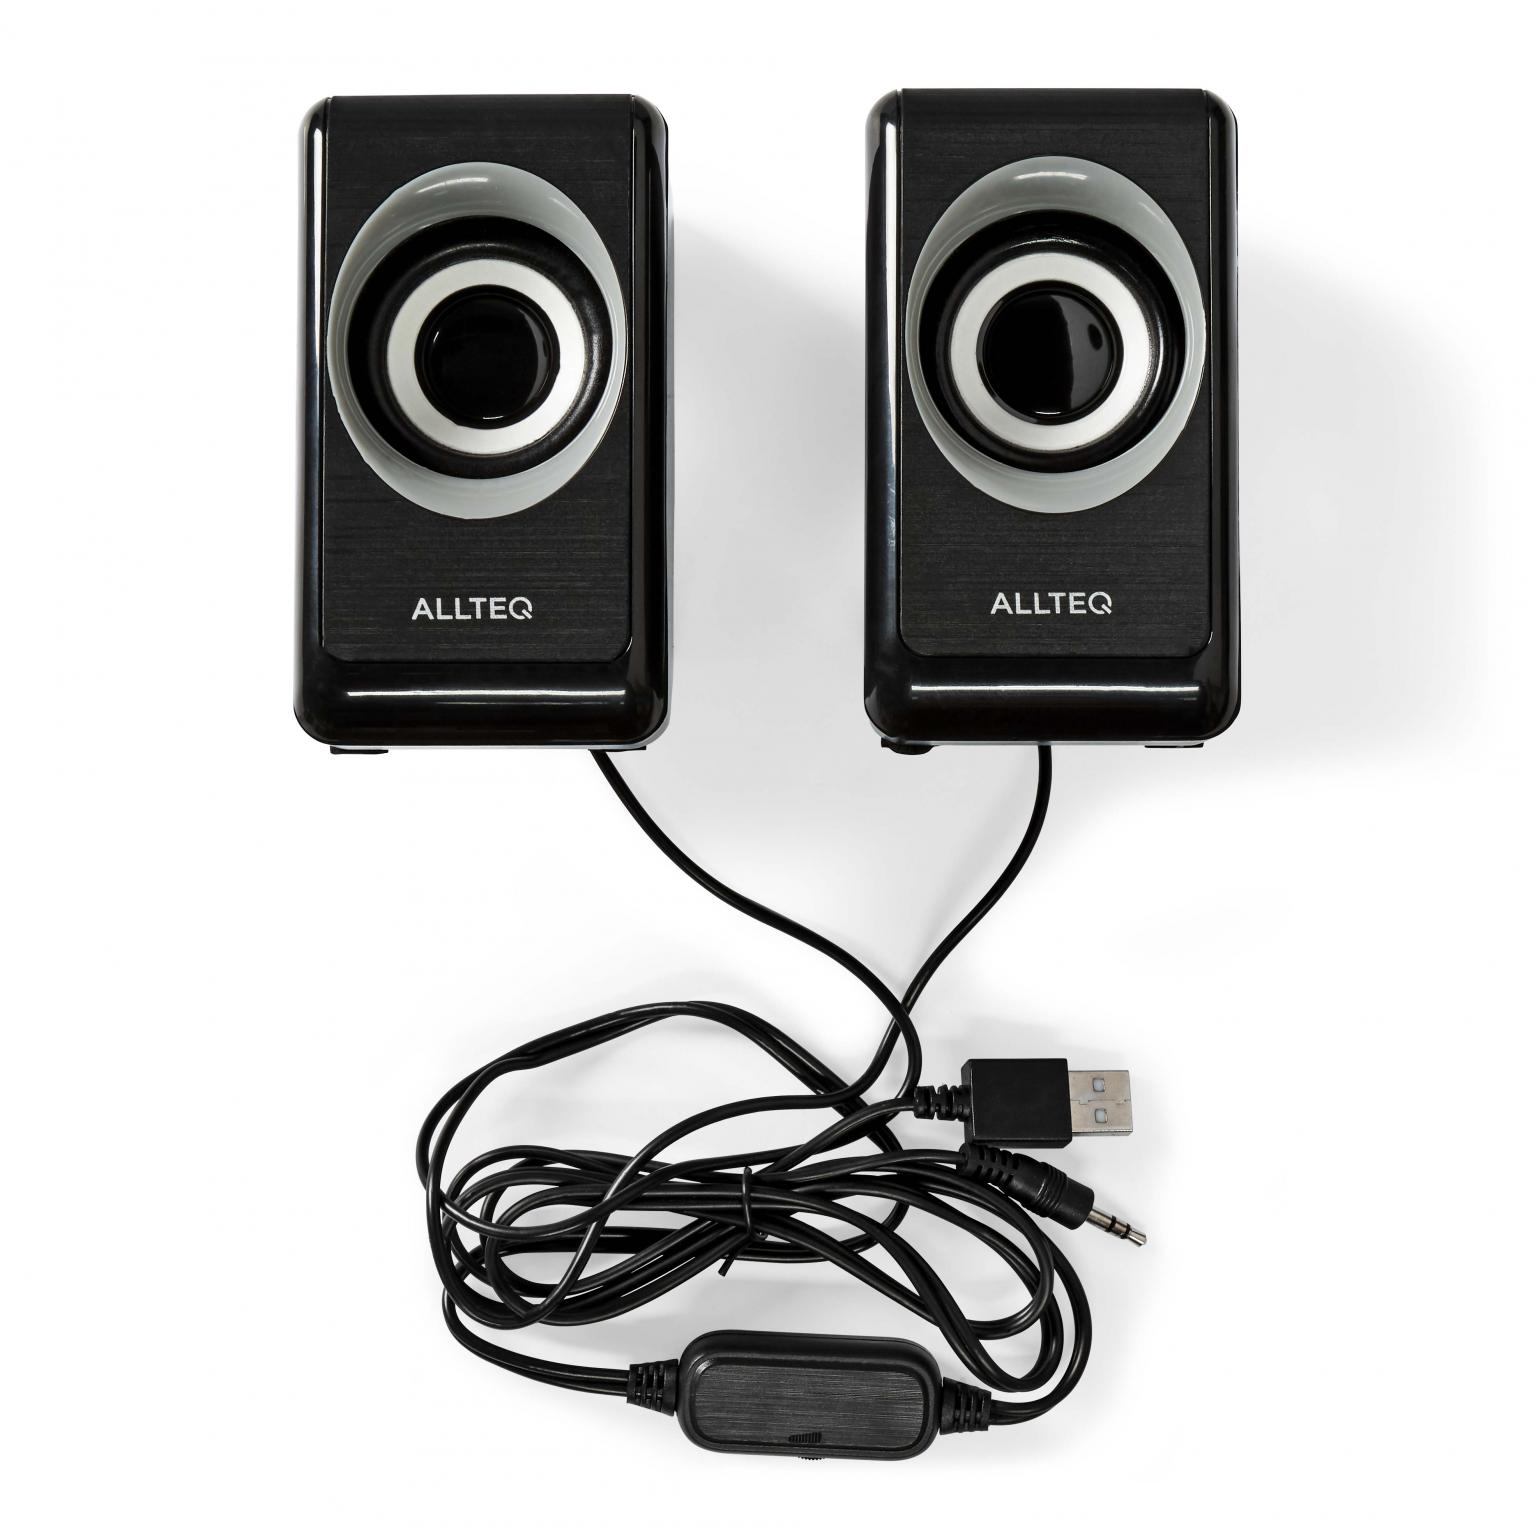 teller Mam ontgrendelen Speaker - Type: PC speaker, Audiokanalen: 2.0, Ingang: Jack 3.5mm male,  Voeding: USB, RMS vermogen: 2x3 Watt.